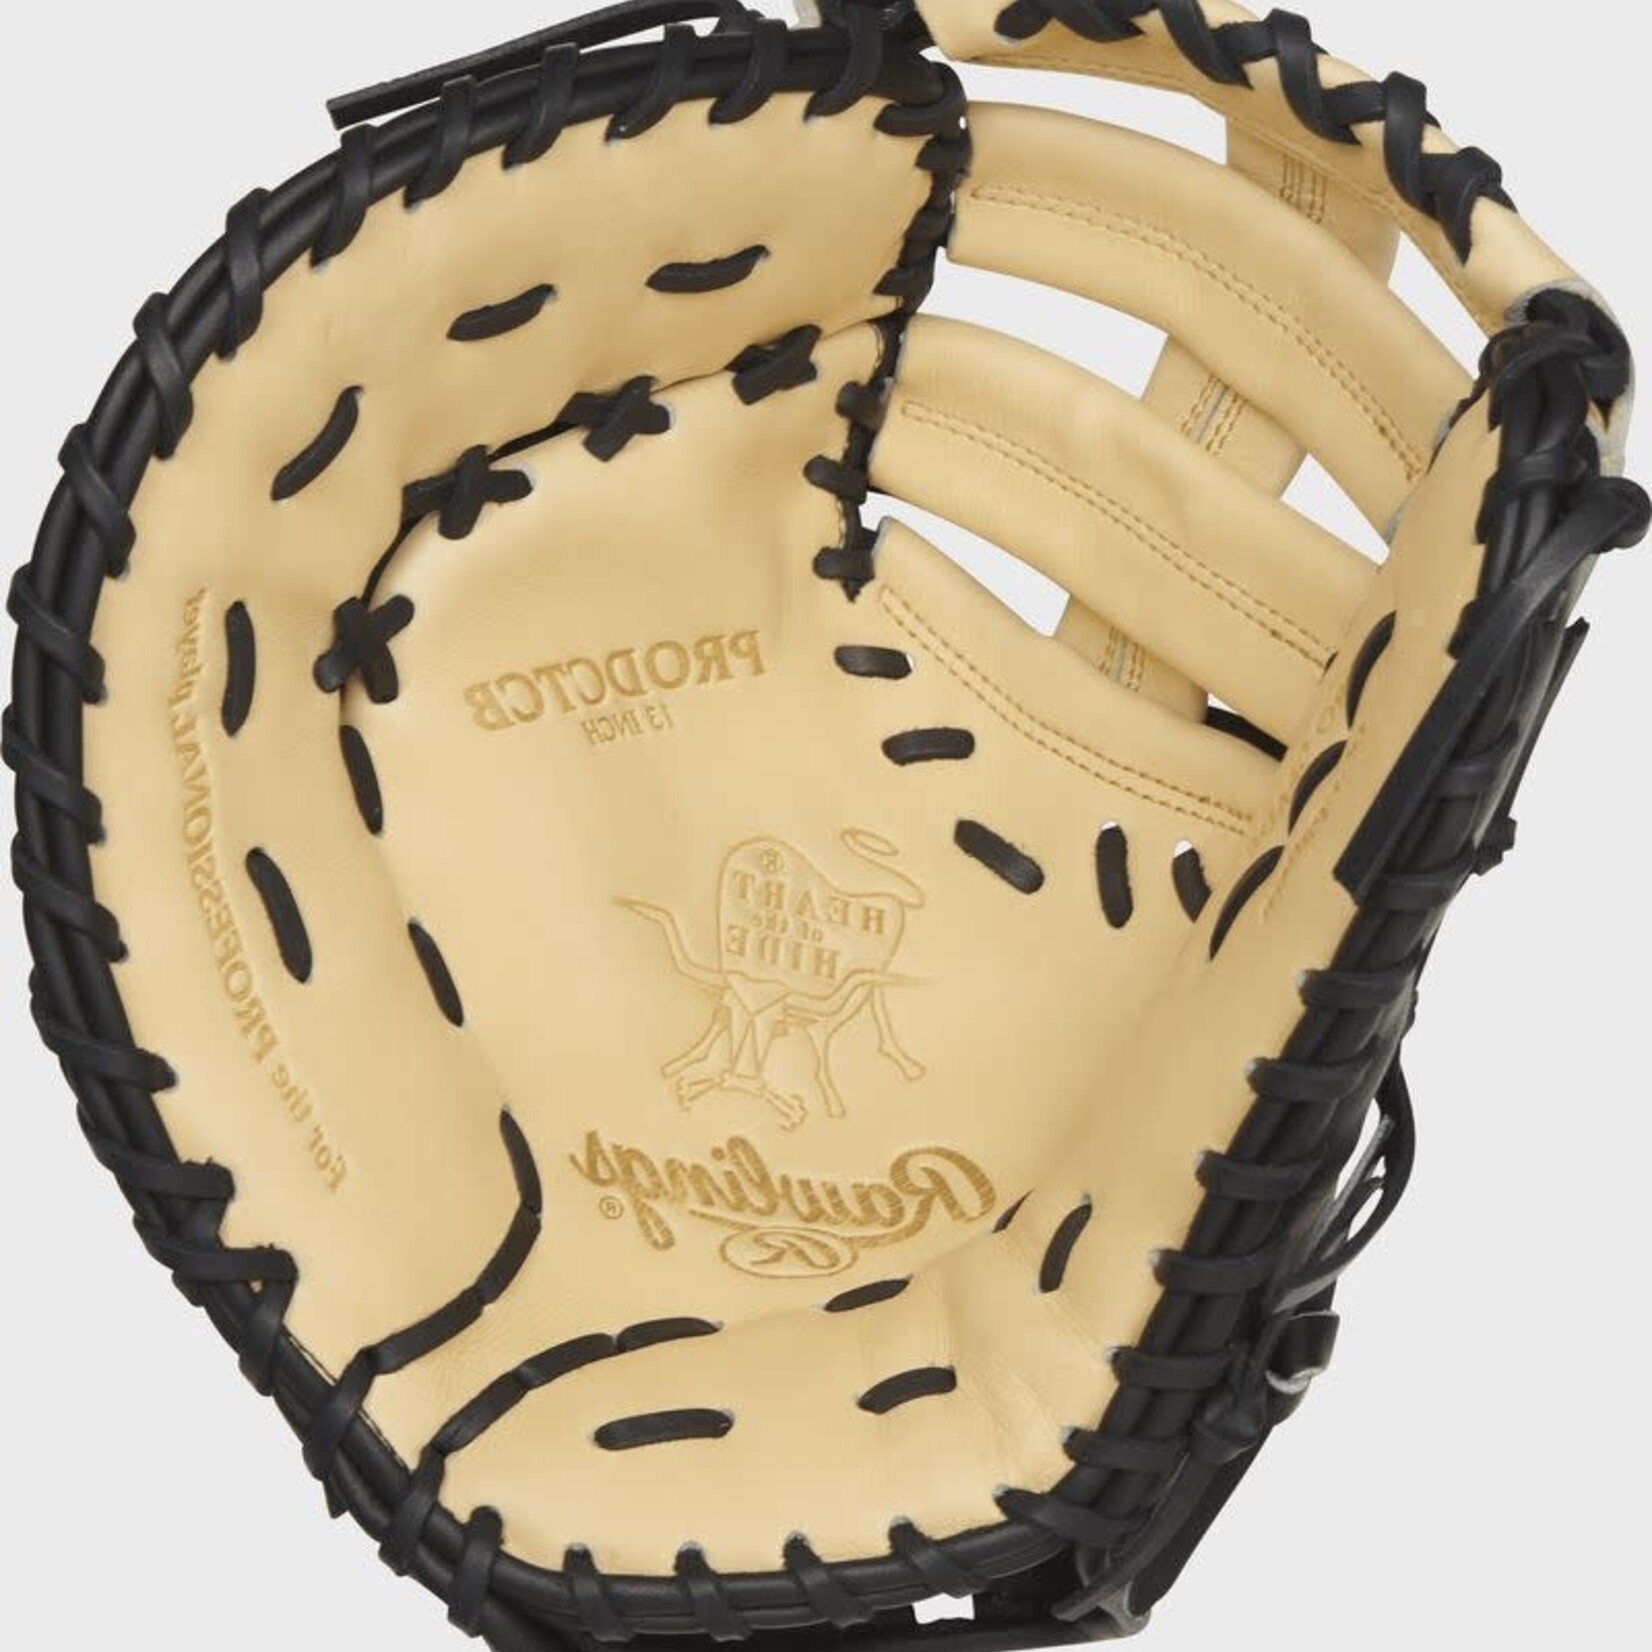 Rawlings Rawlings Baseball Glove, Heart of the Hide PRODCTCB, 13”, Full Right, First Base Mitt